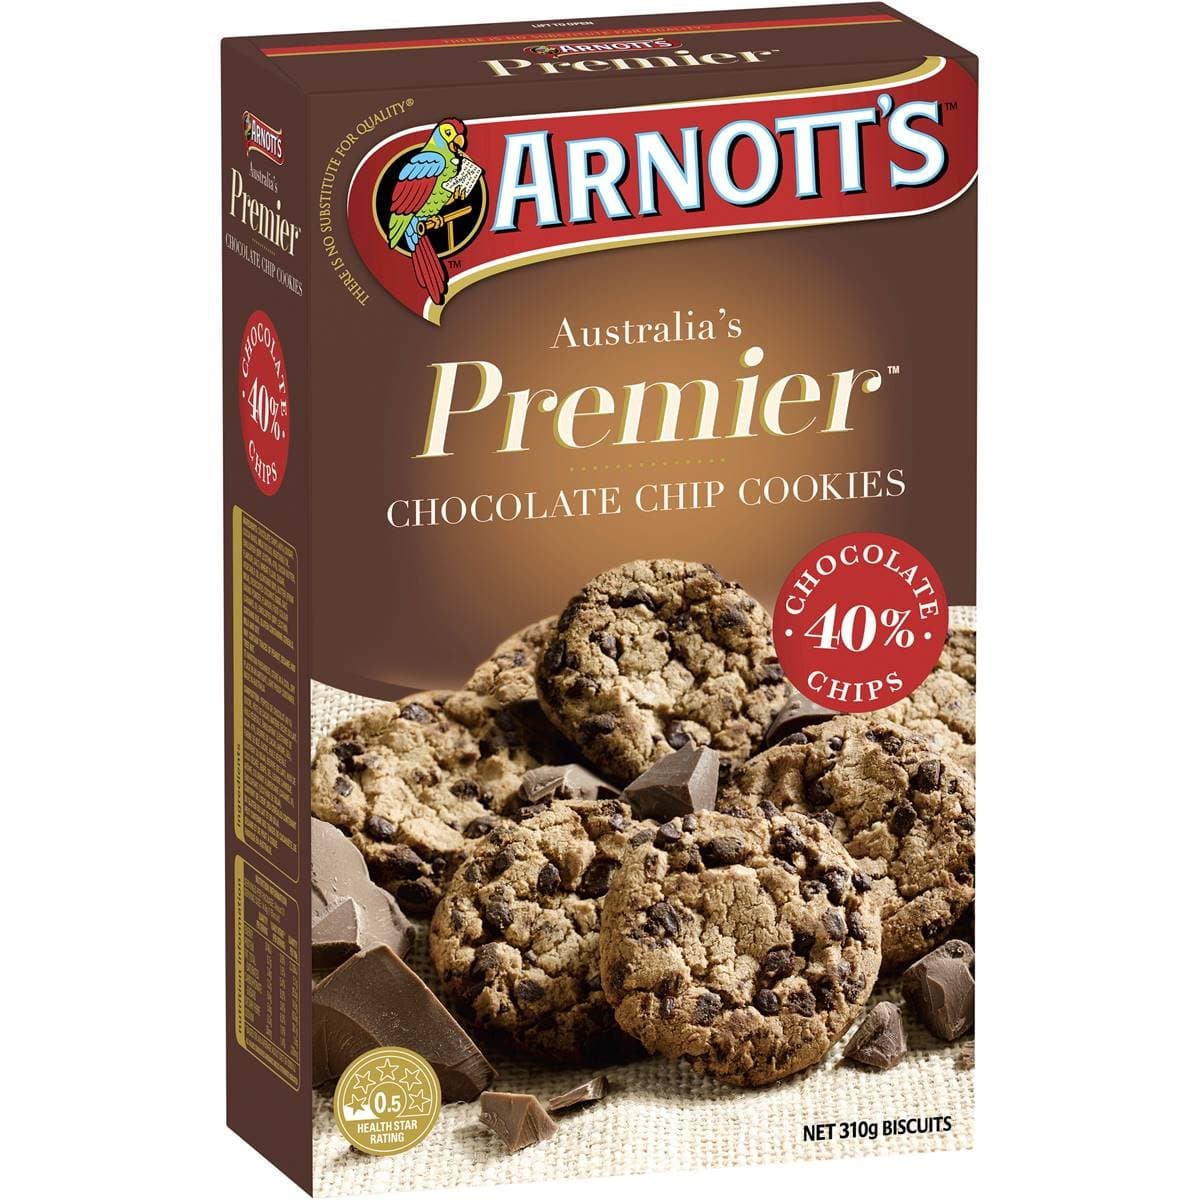 Arnotts Premier Choc Chip Cookies 310g